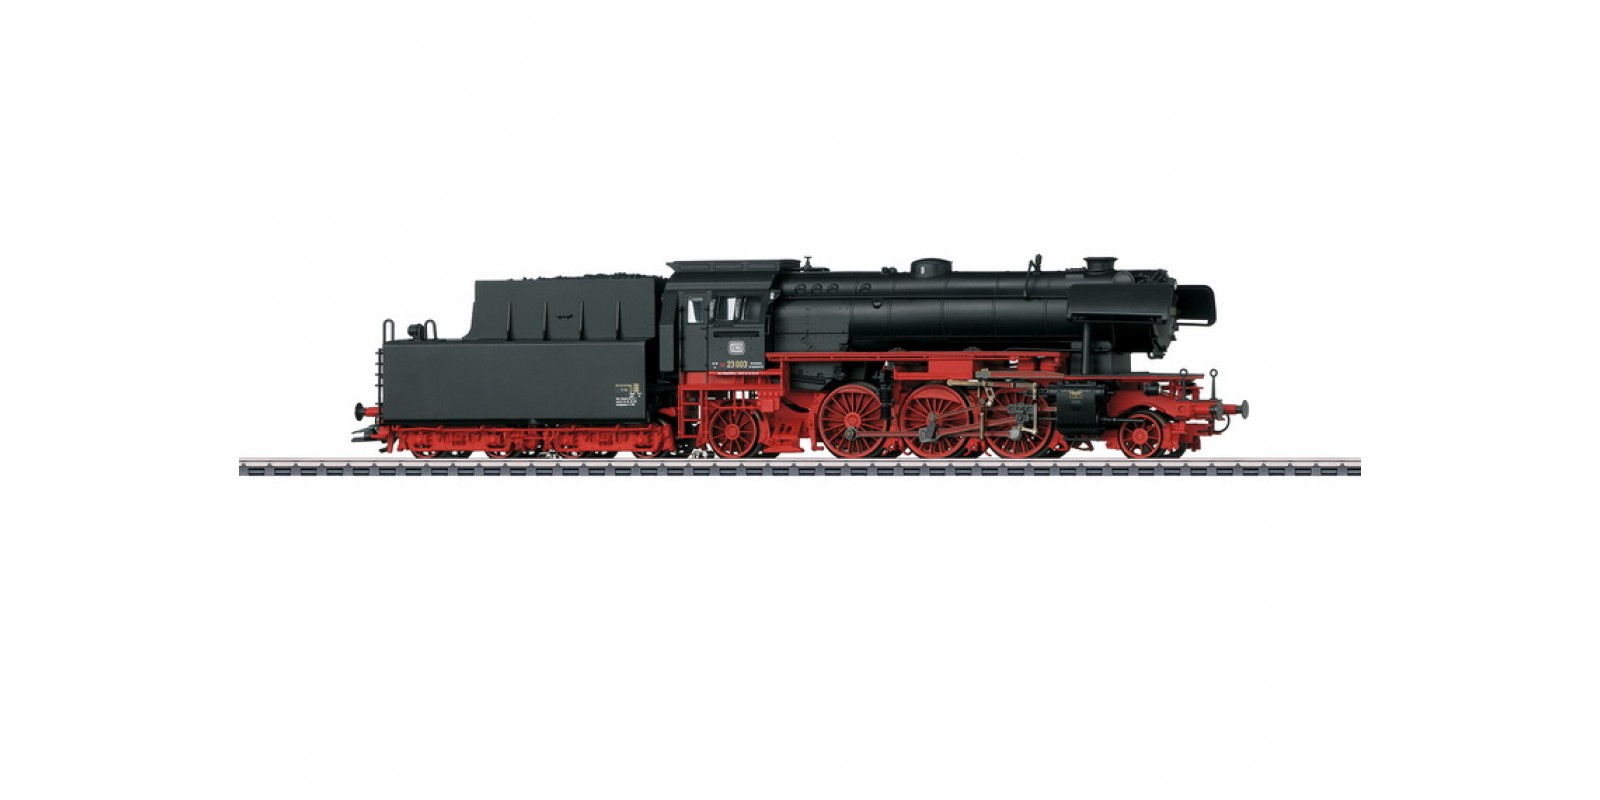 39236 Class 23.0 Passenger Steam Locomotive with a Tender